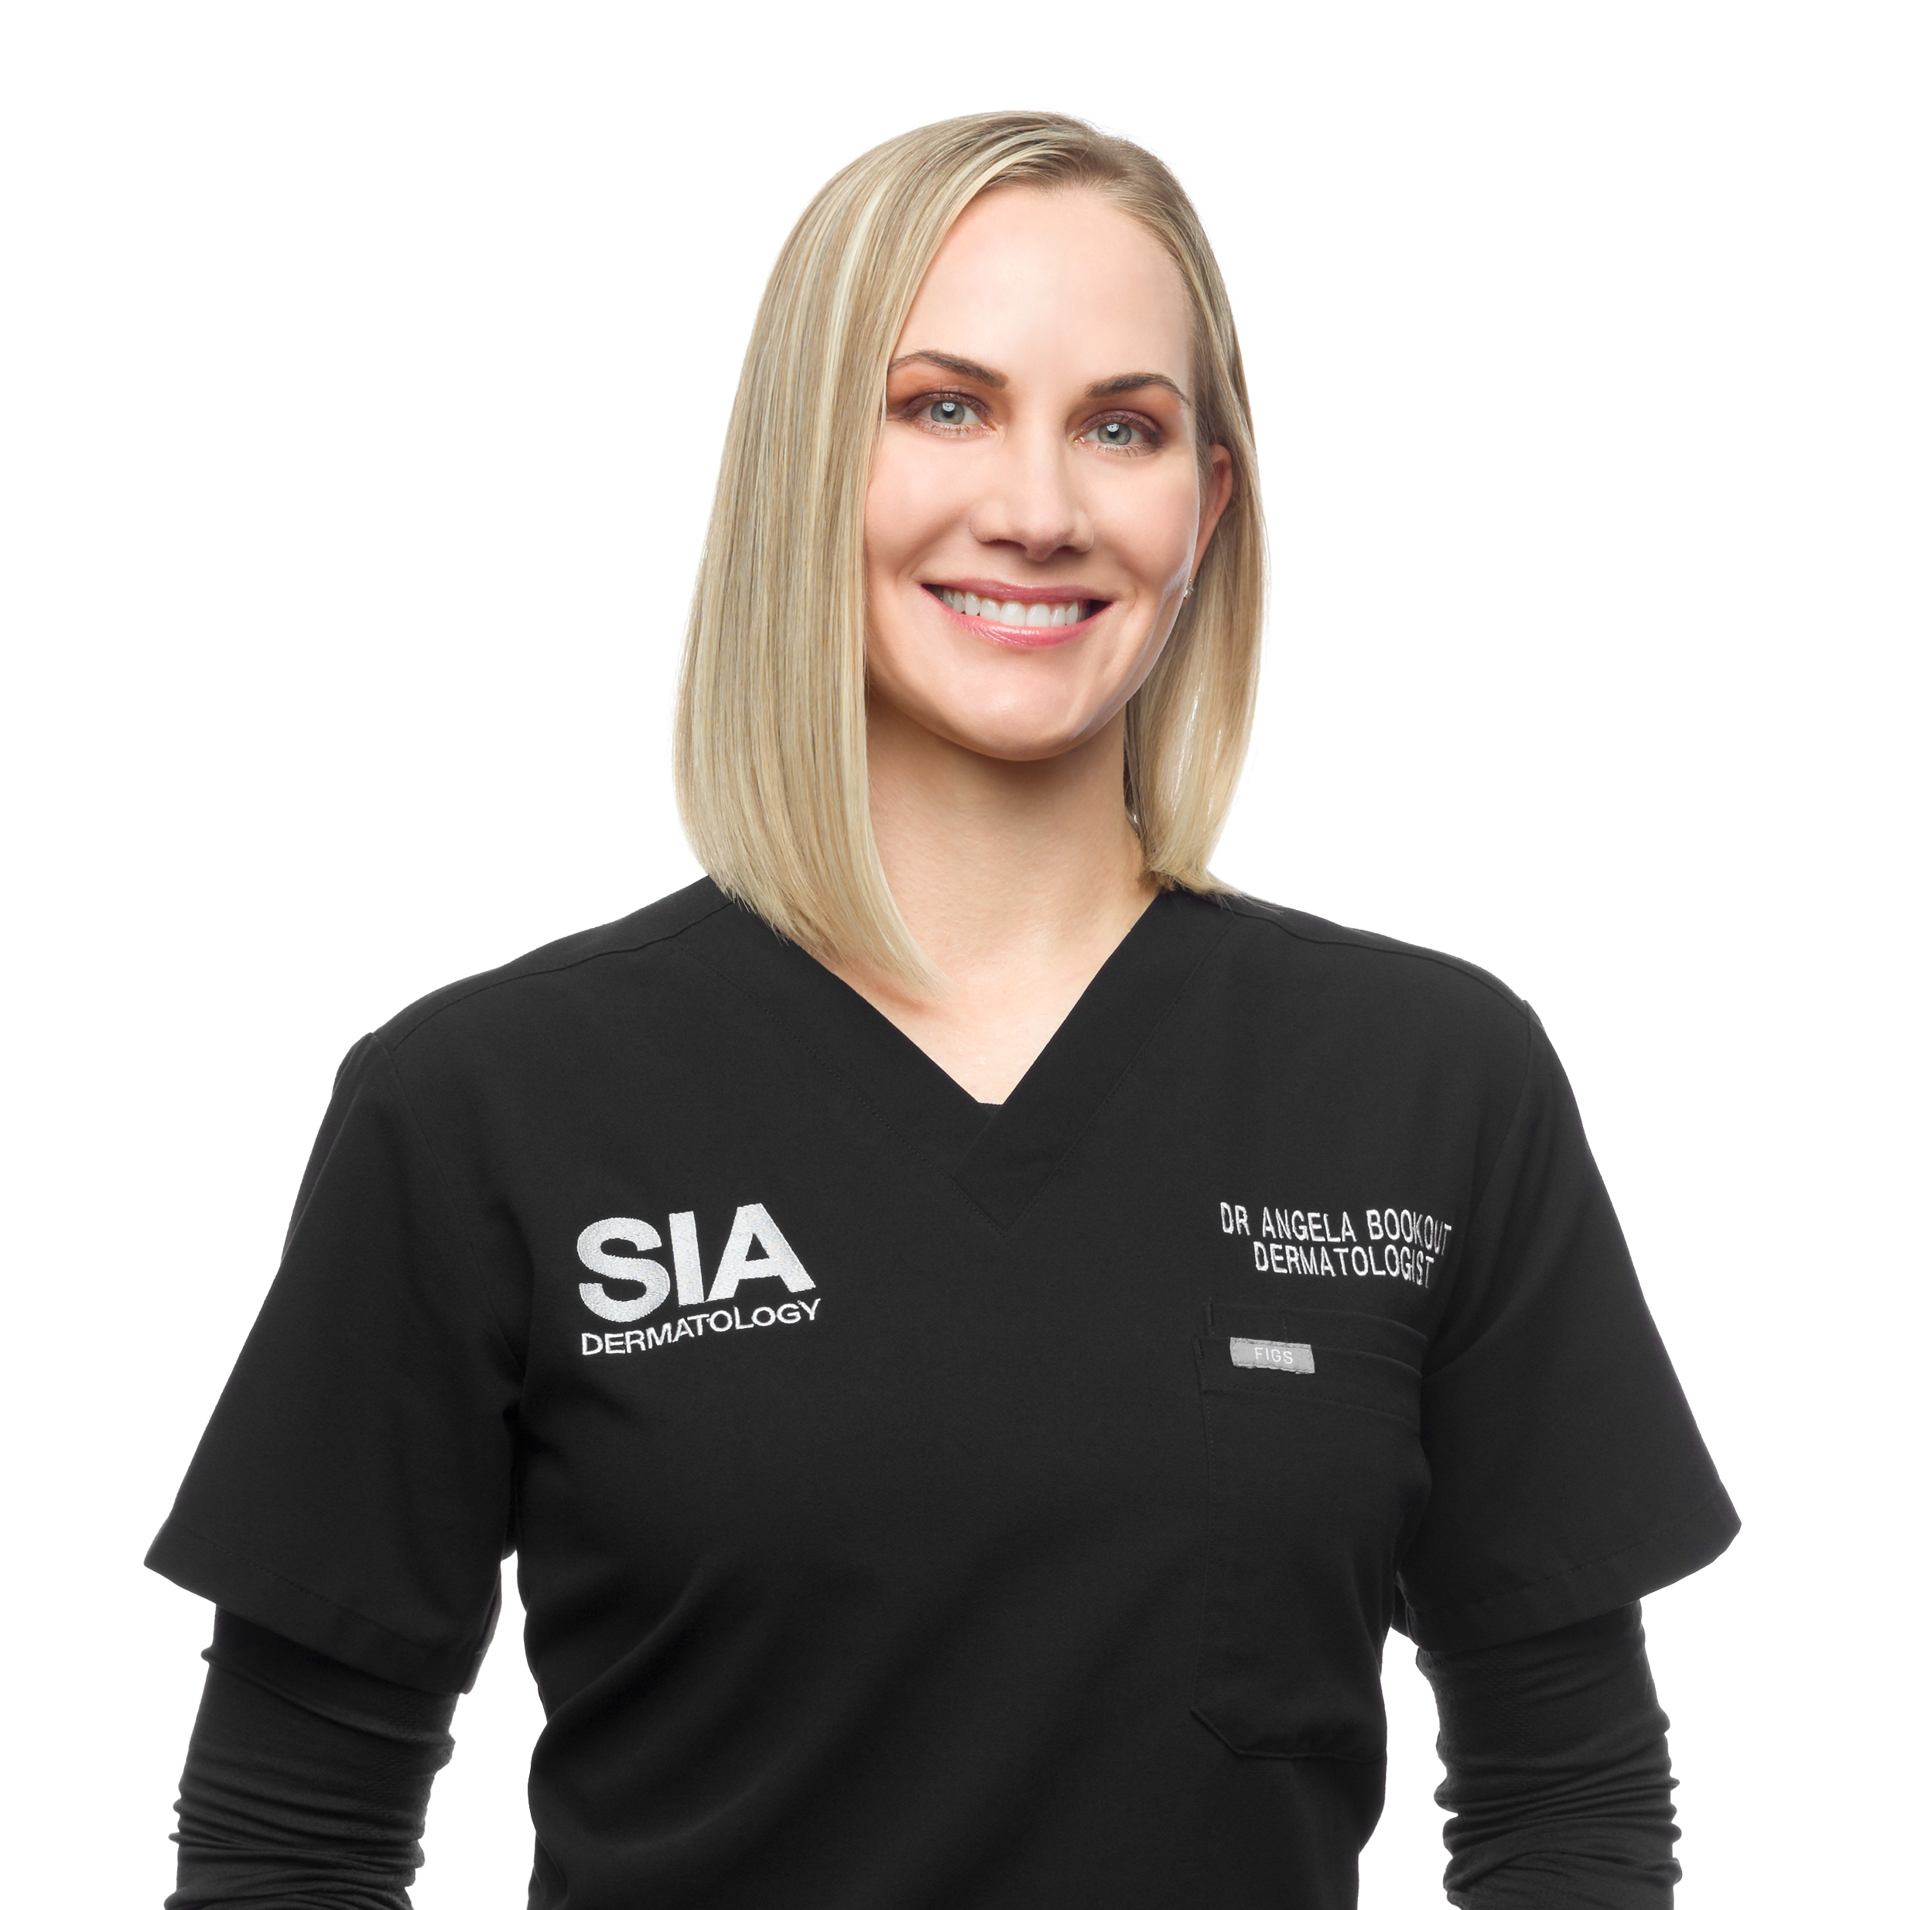 SIA Dermatology - Angela, Bookout DO, FAAD